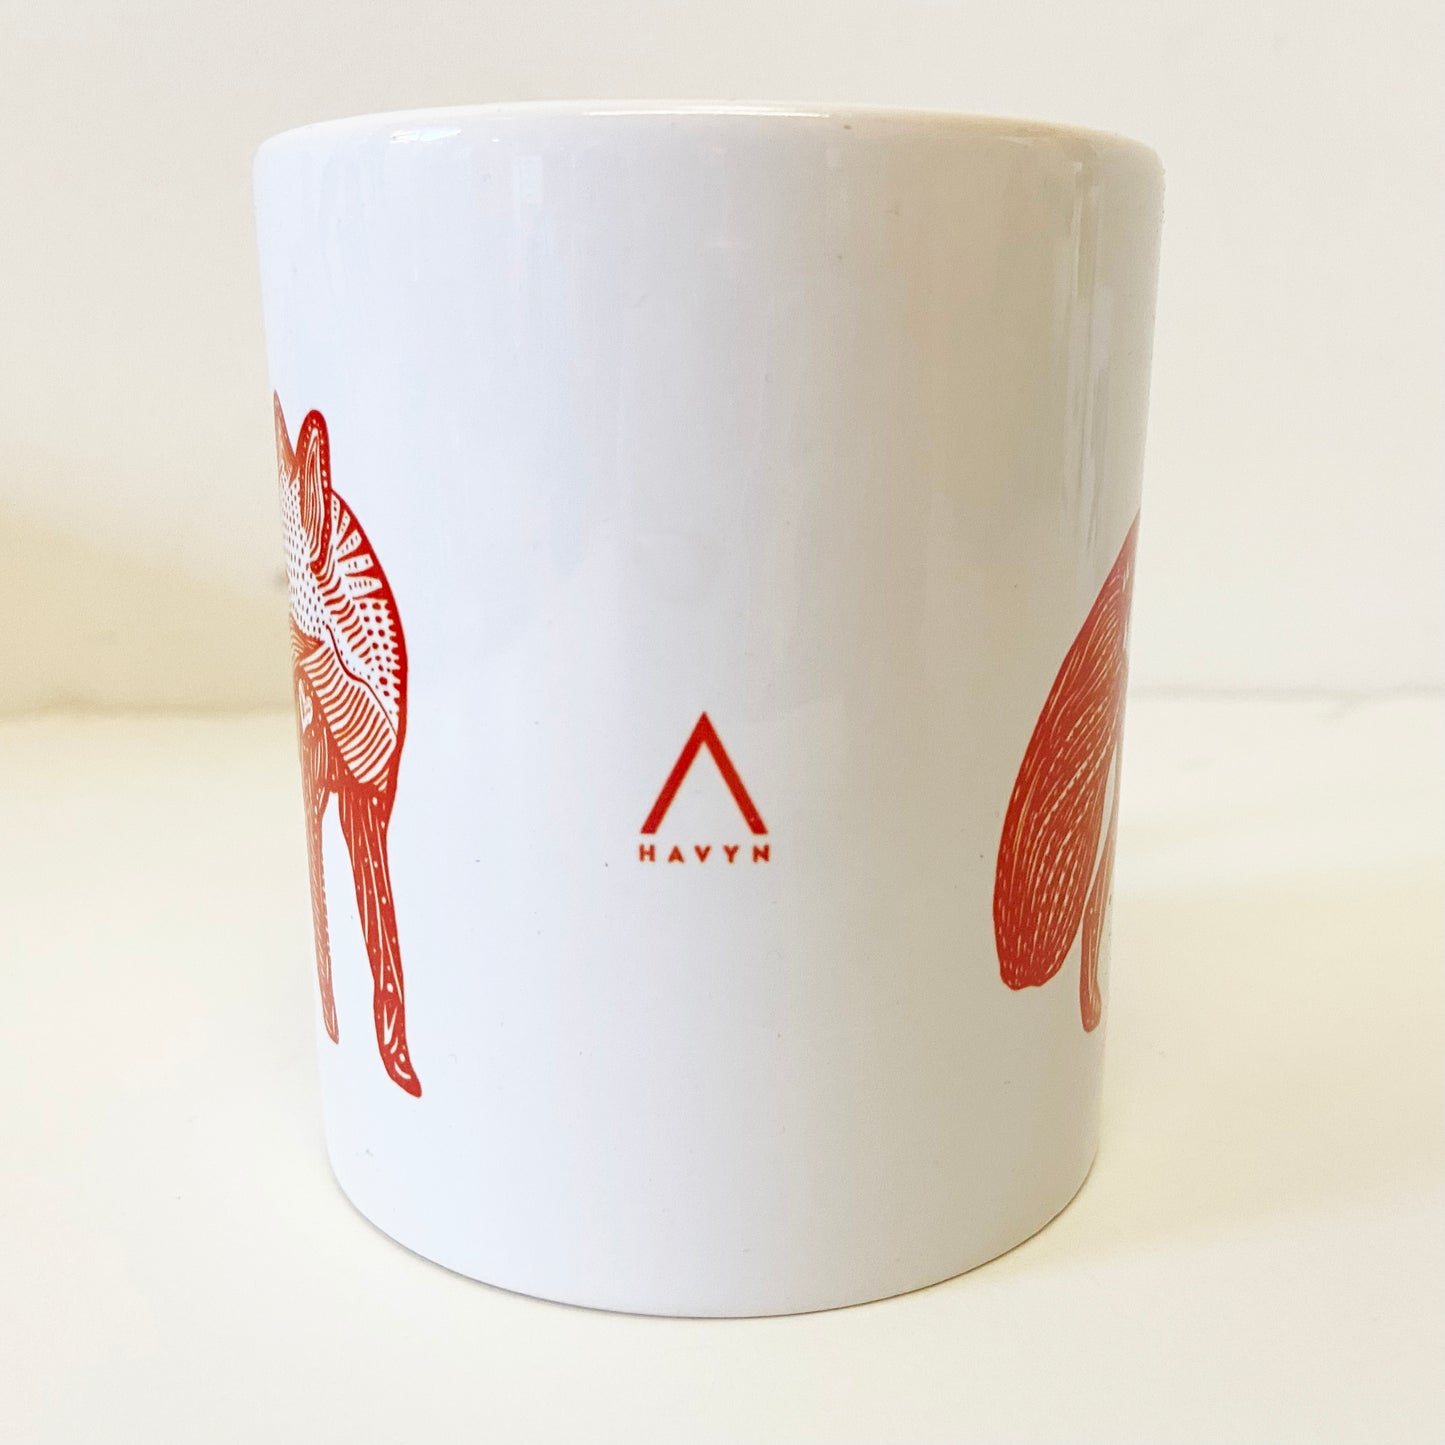 Orange Fox Ceramic Tea or Coffee Mug